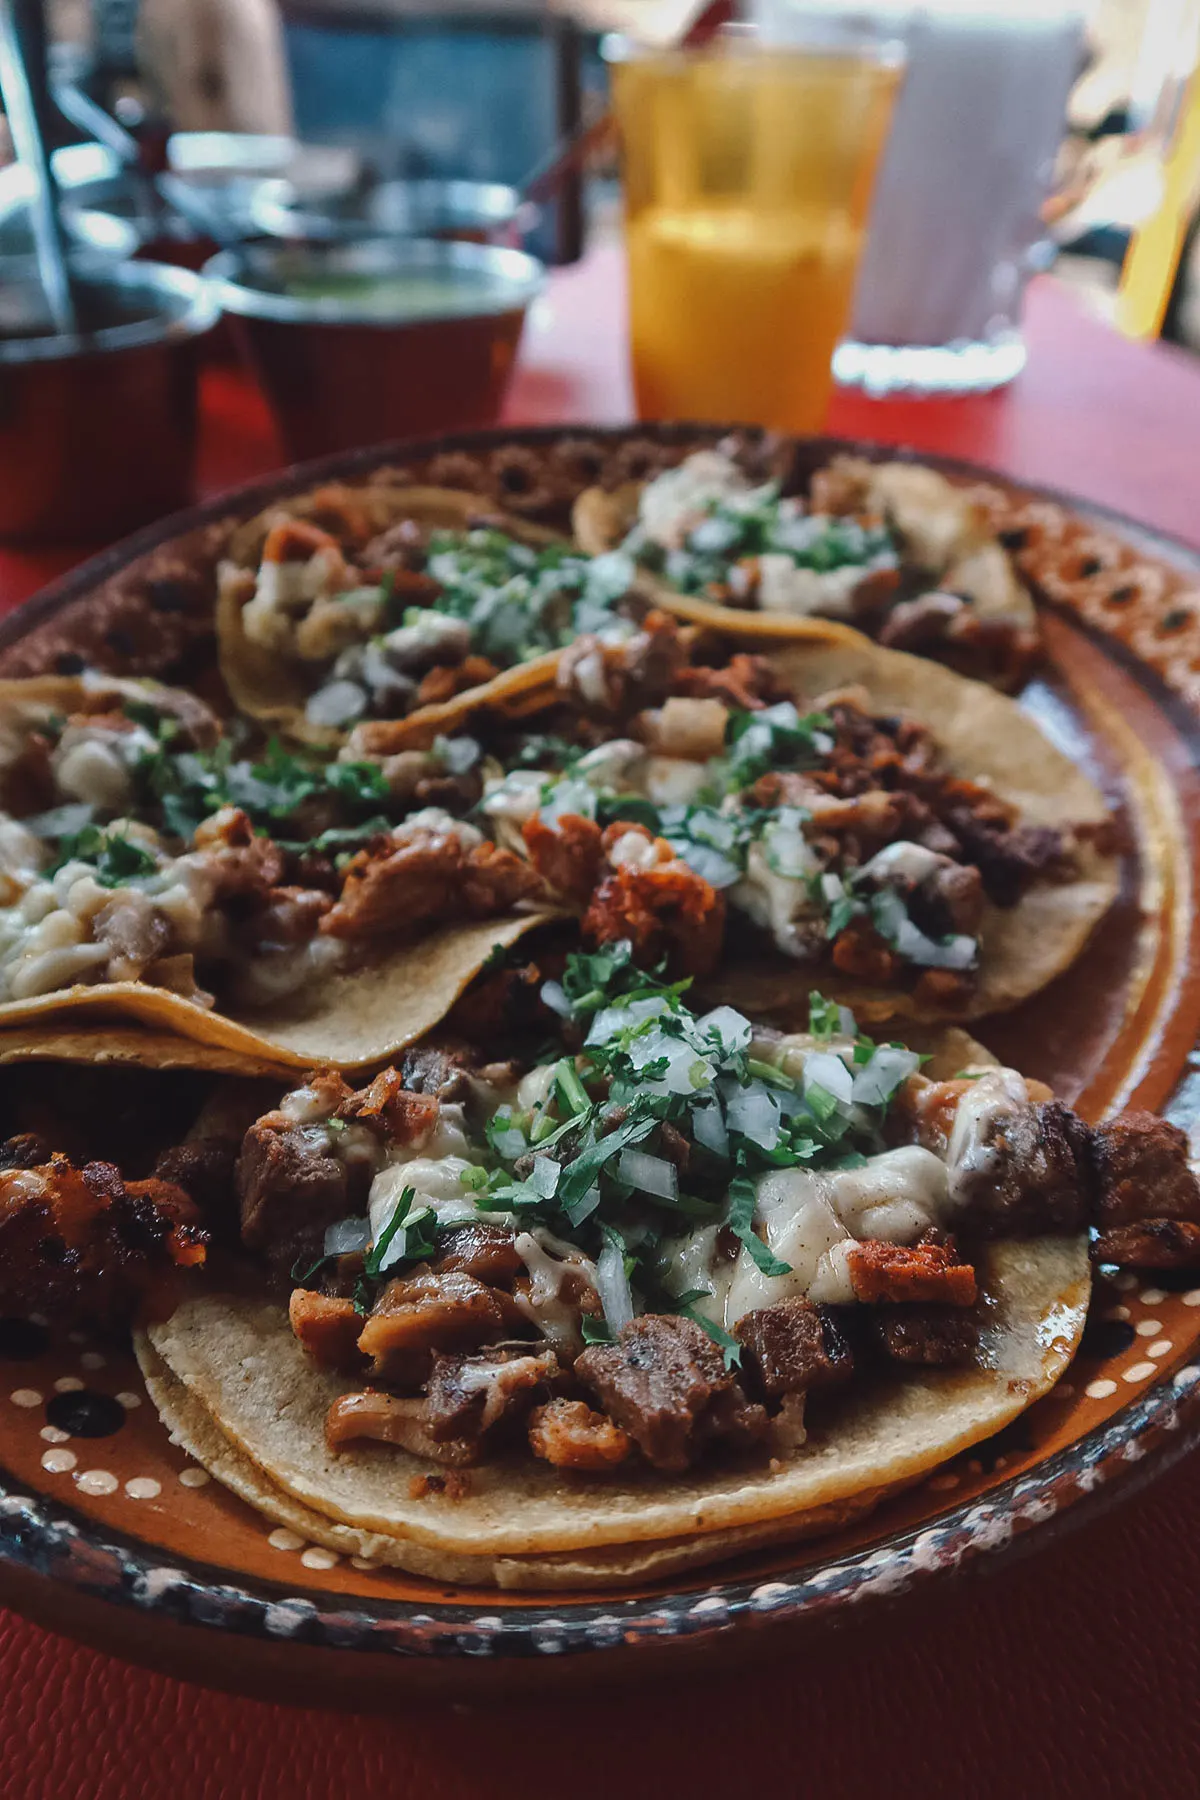 Tacos campechanos